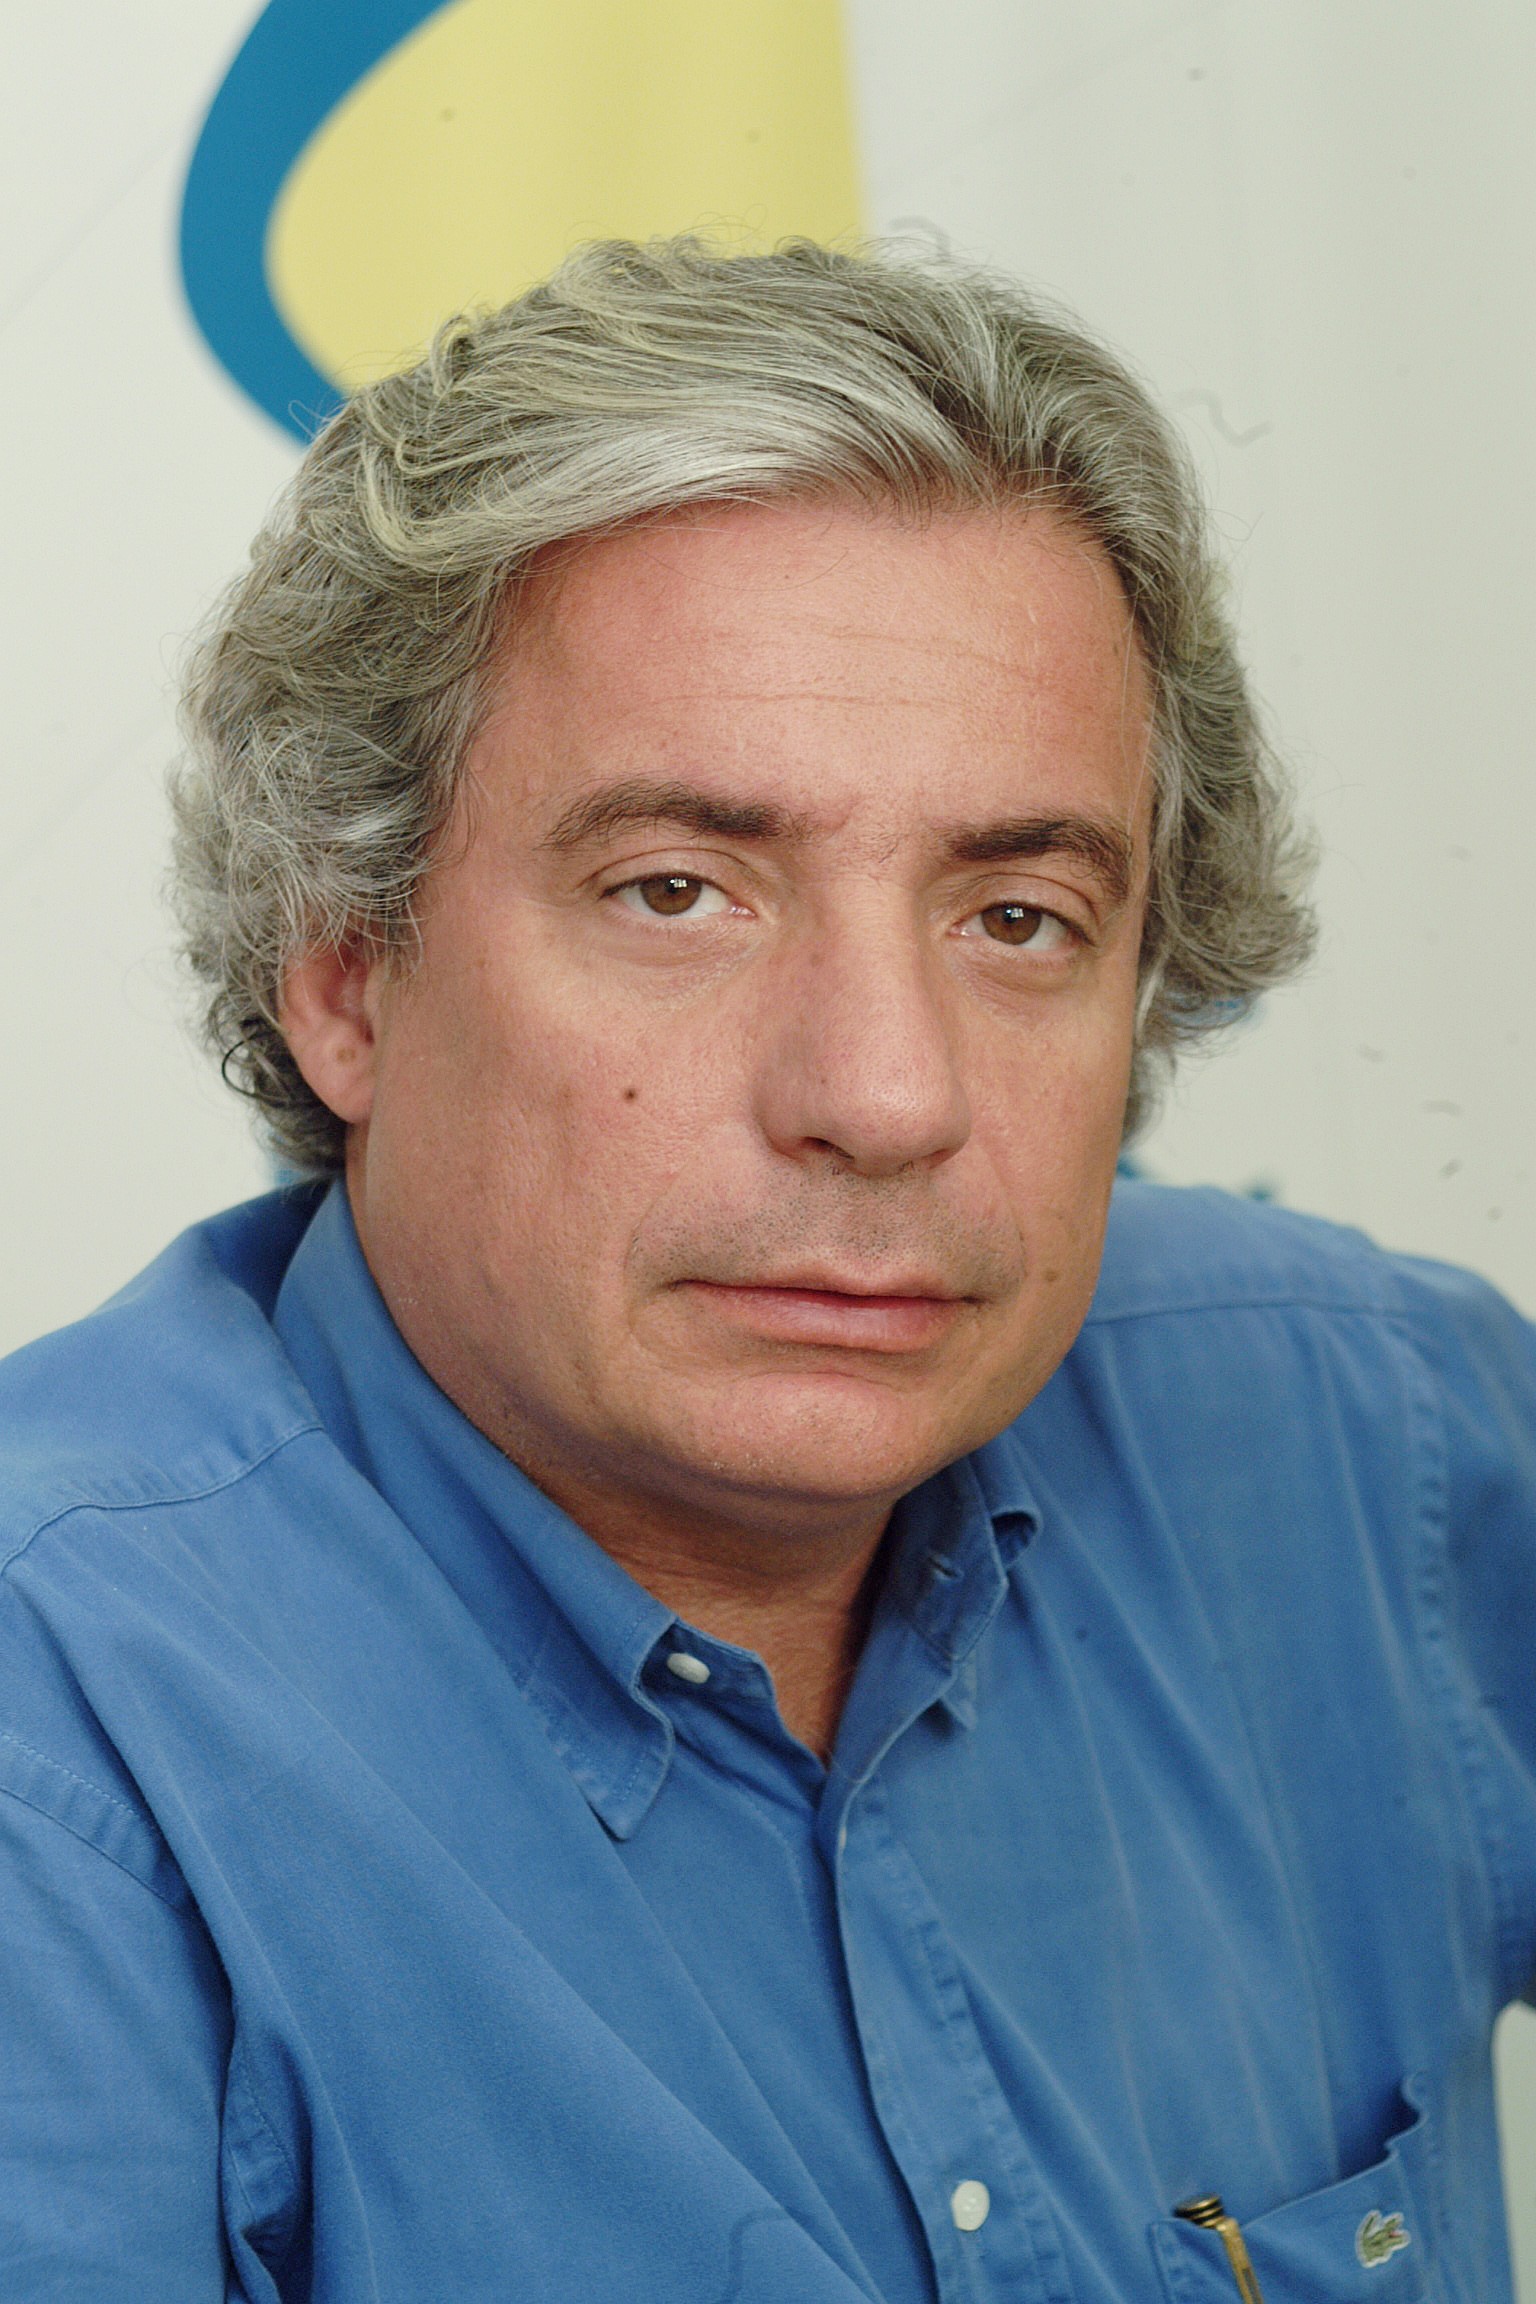 Adriano Pires